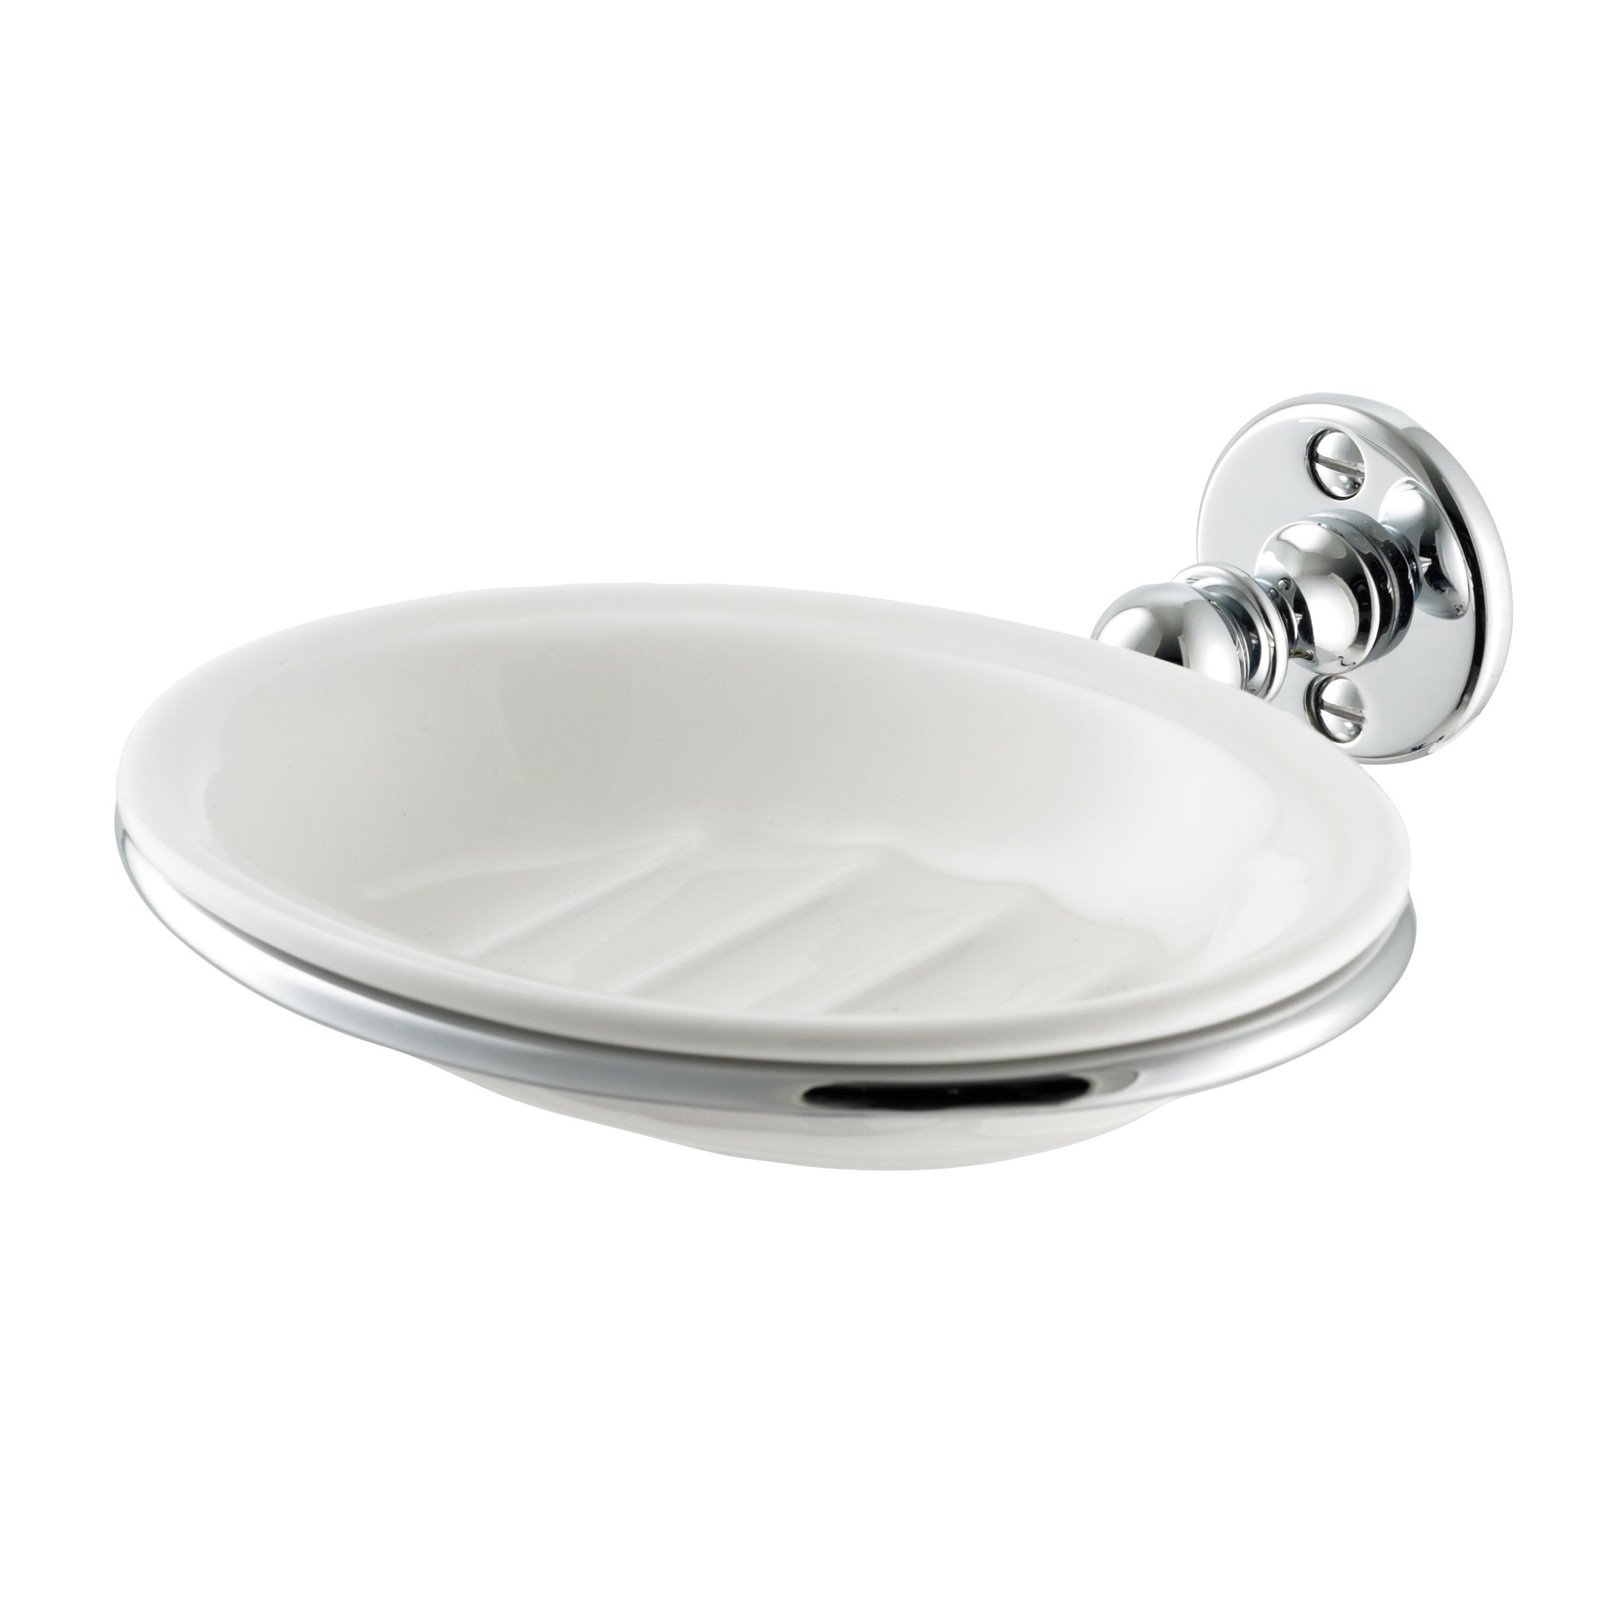 Bathroom Porcelain Soap Dish Image